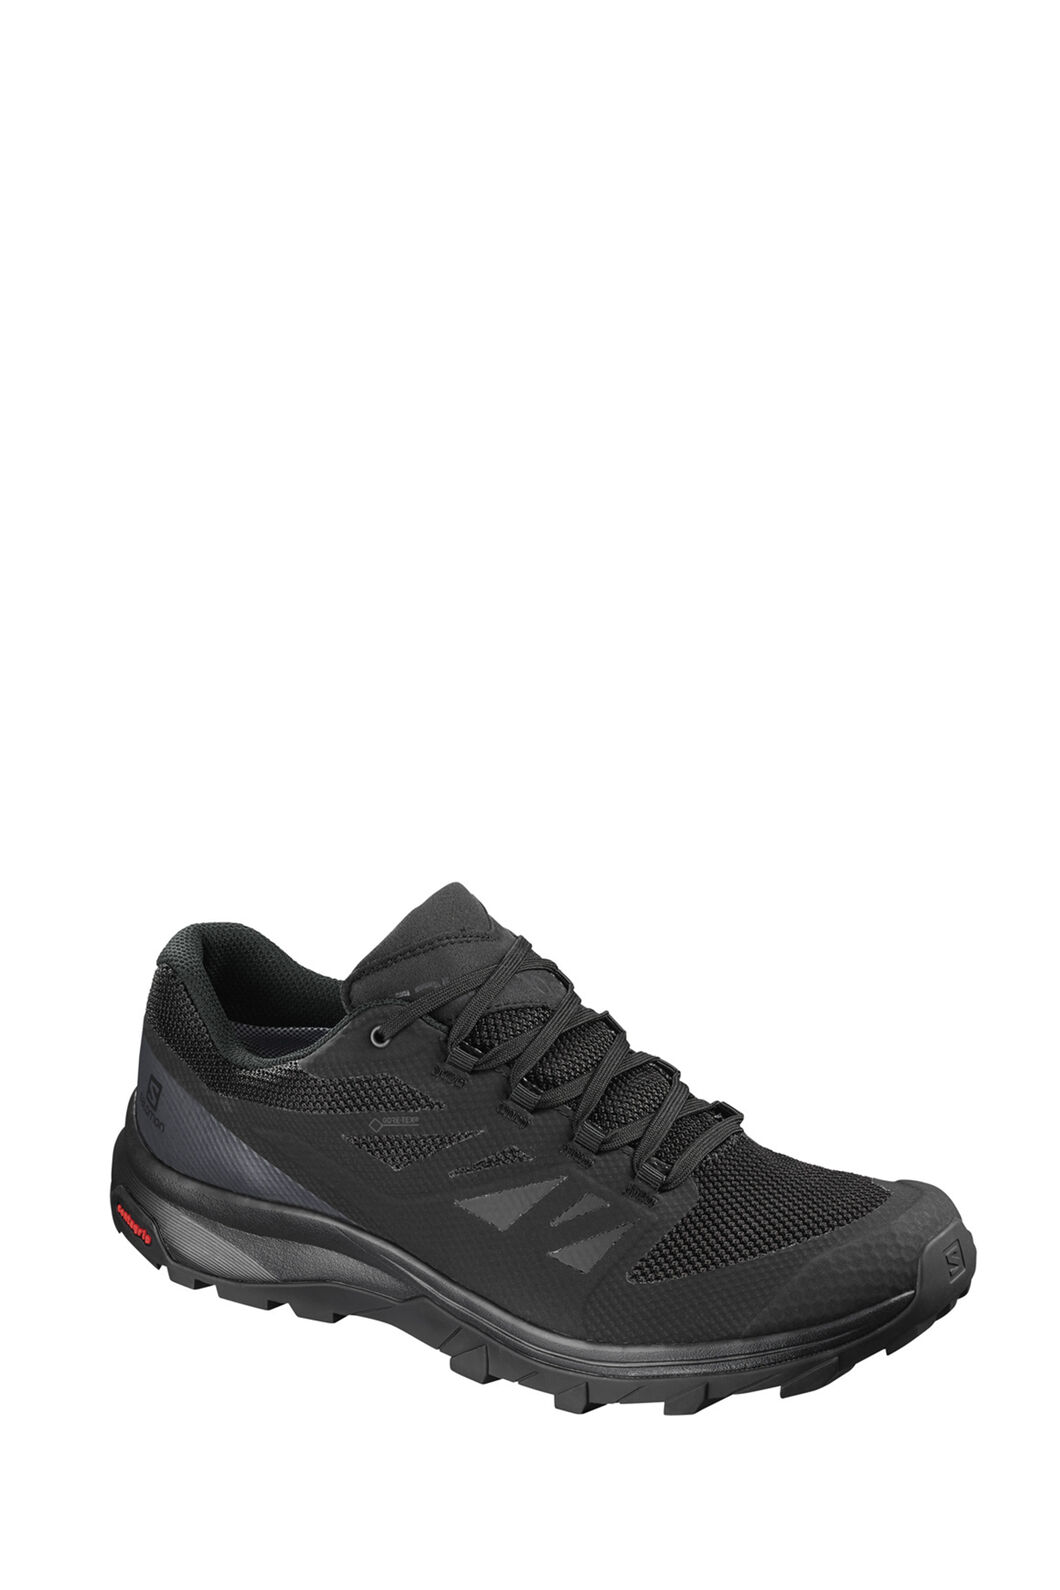 Salomon Men's Outline GTX Hiking Shoes | Macpac